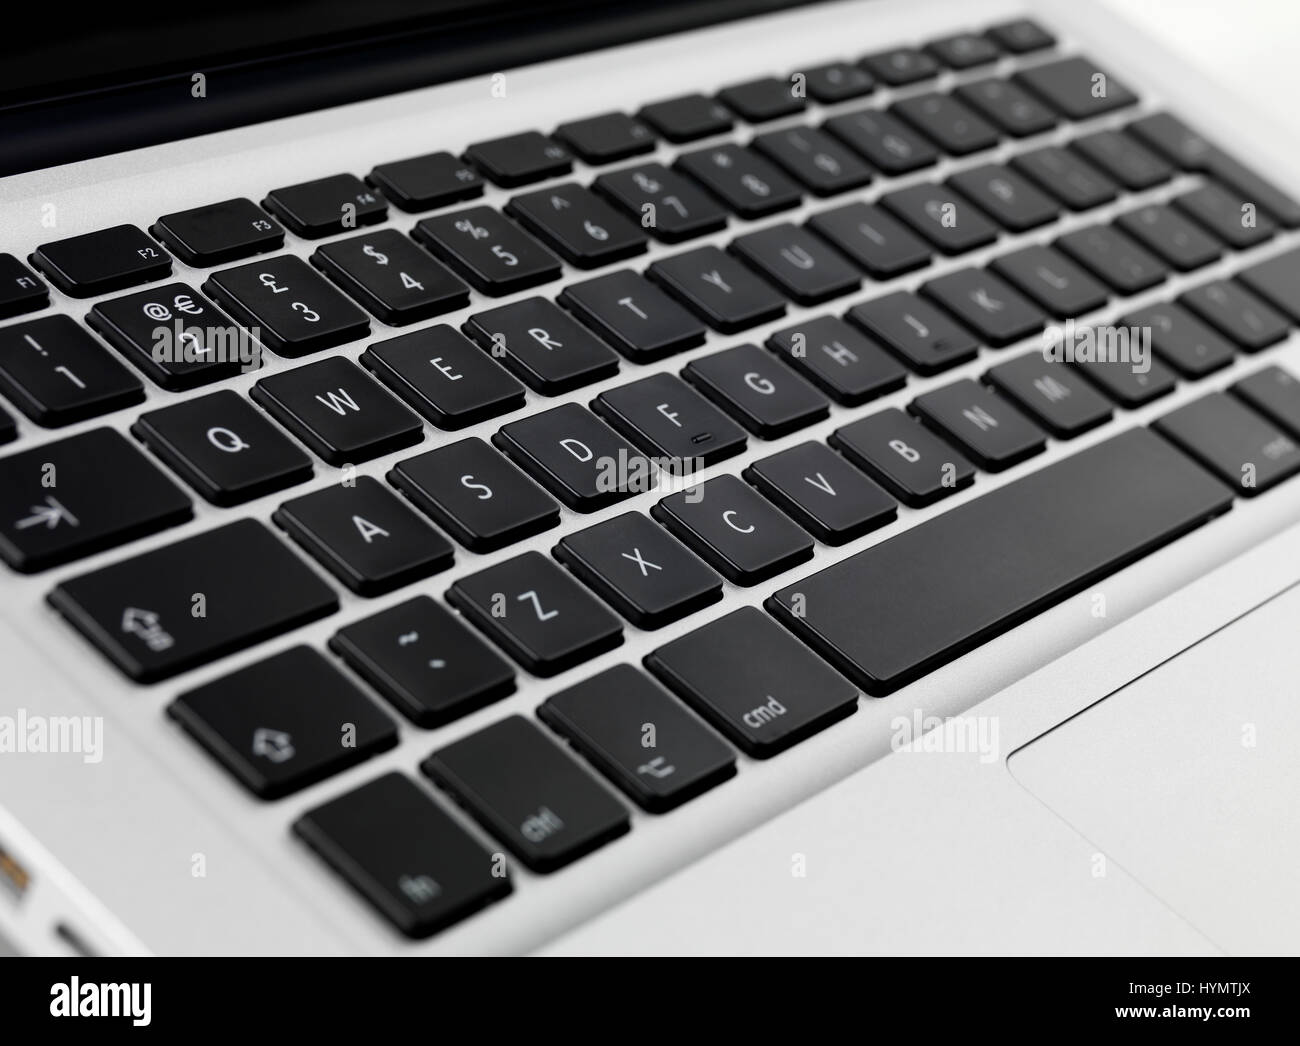 Laptop keyboard full frame Stock Photo